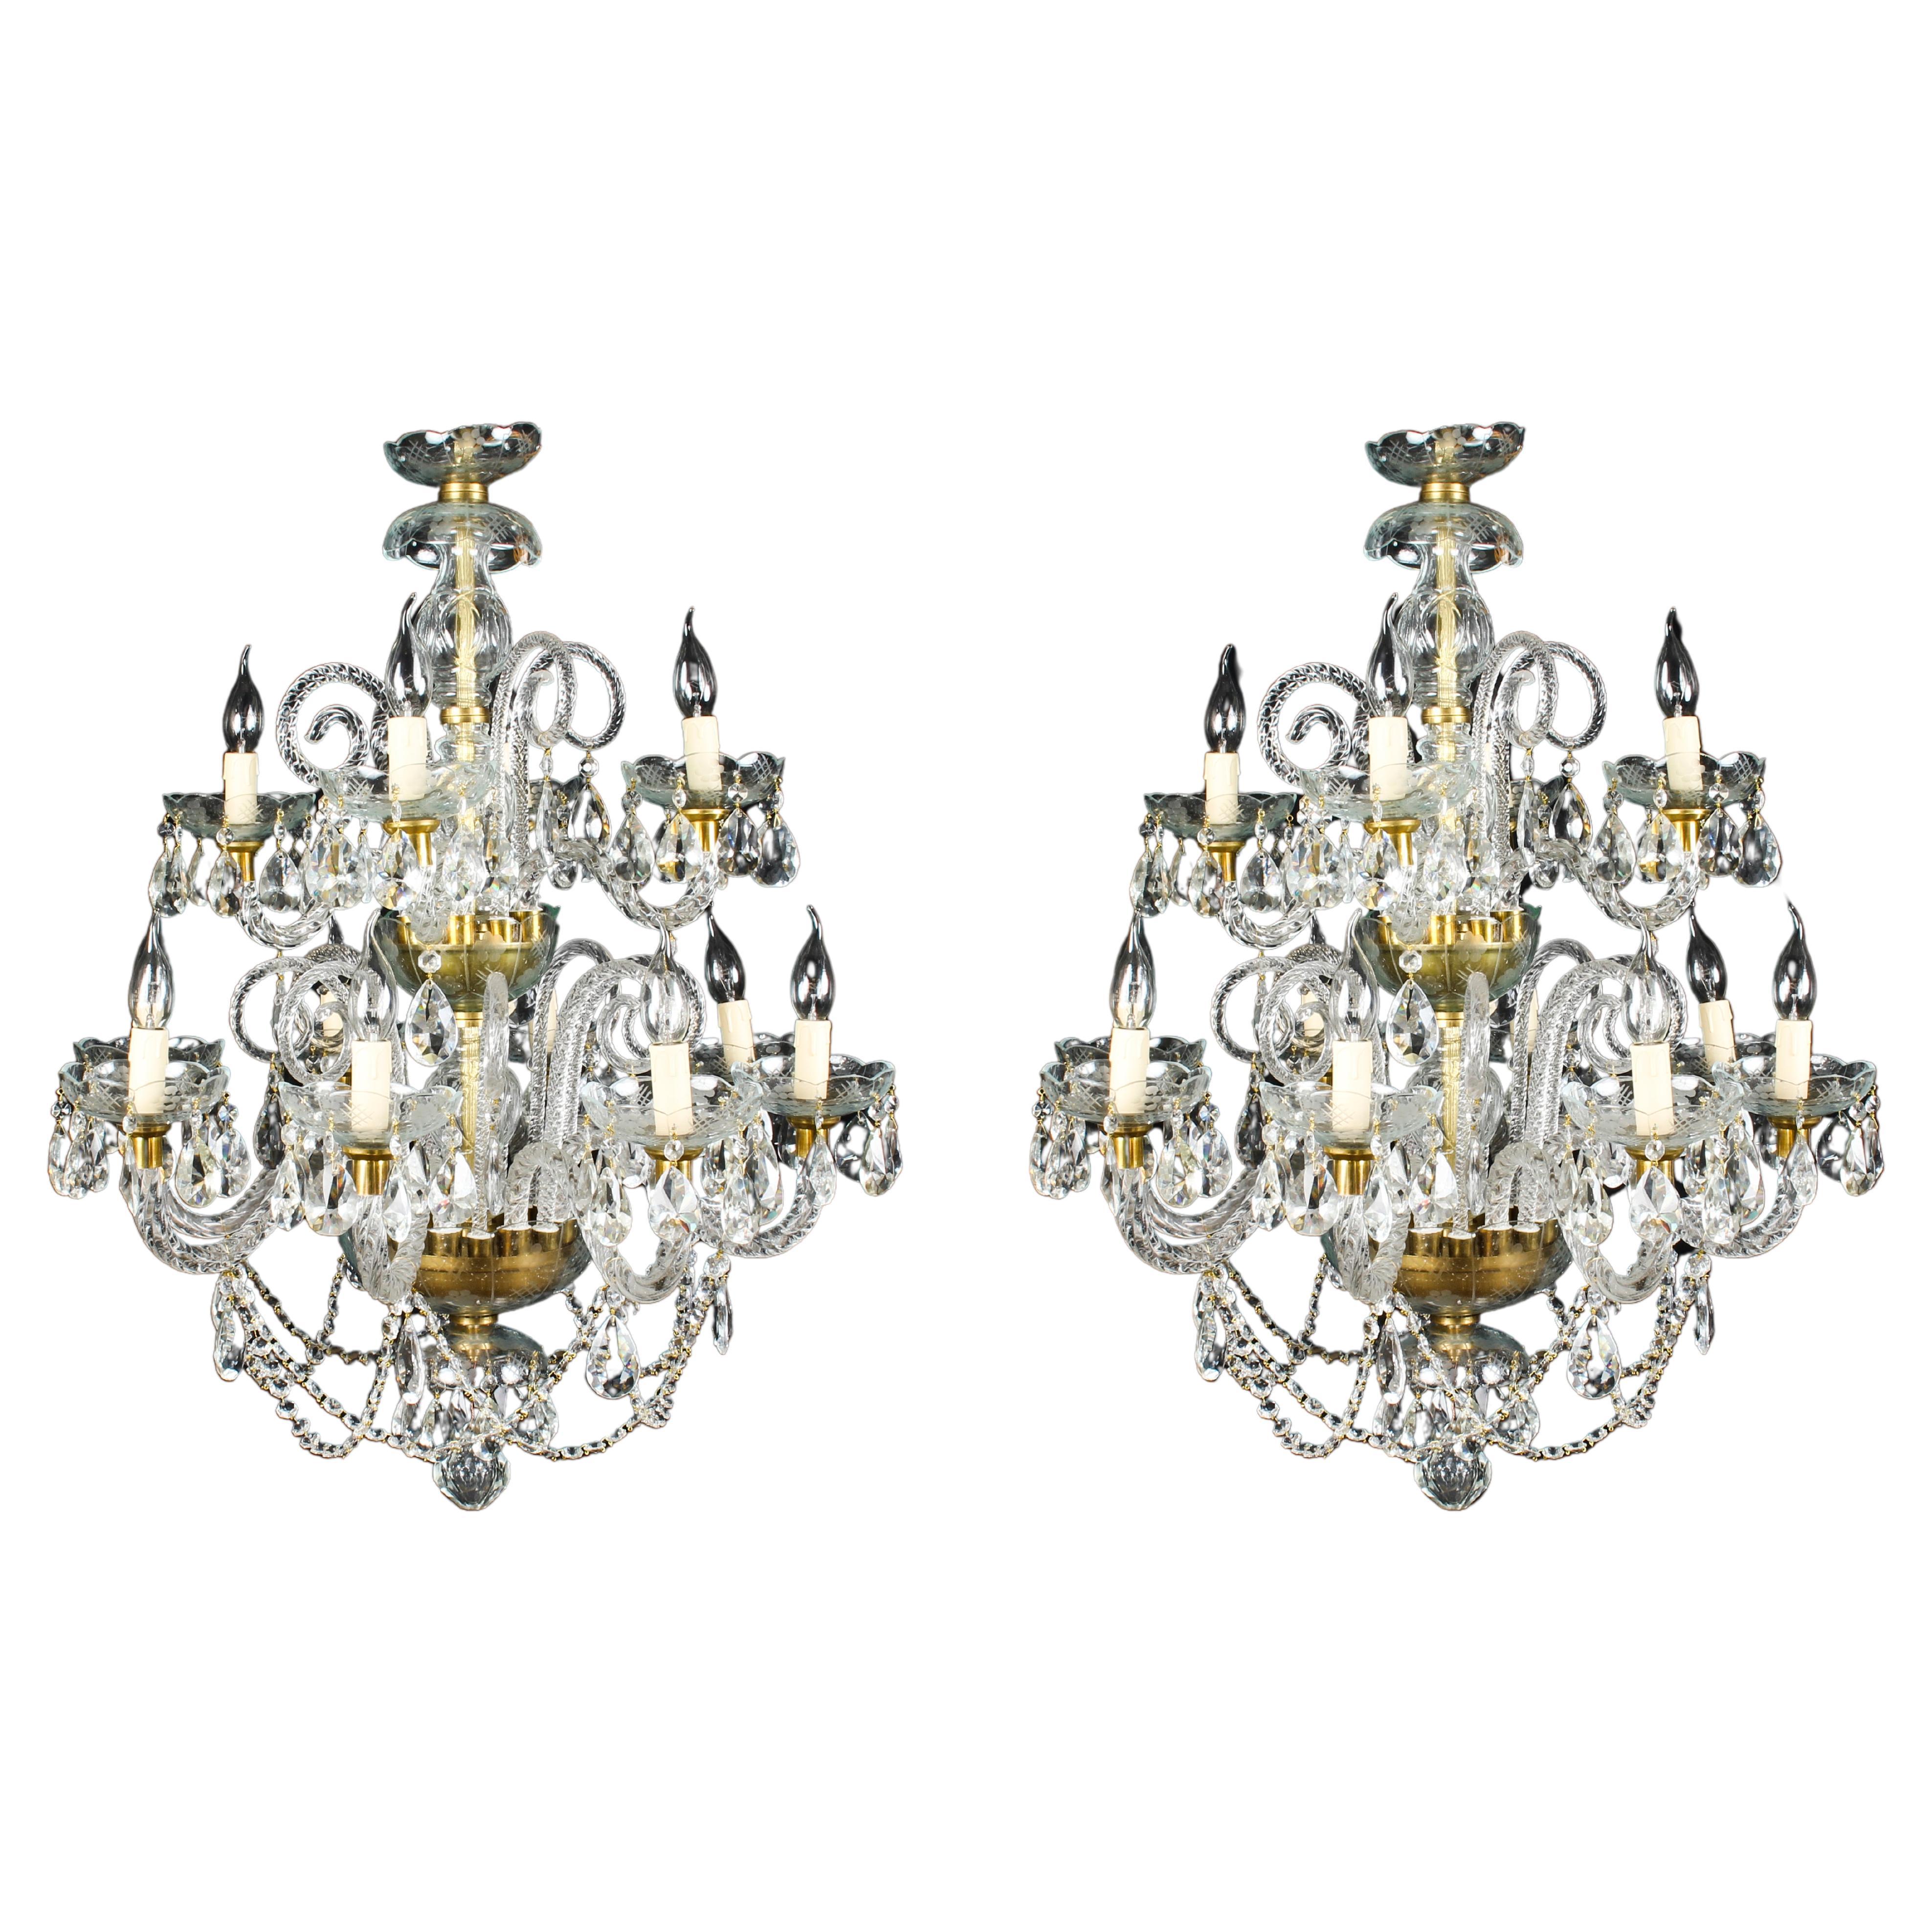 Pair of Vintage Venetian 12 Light Crystal Chandeliers 20th Century For Sale